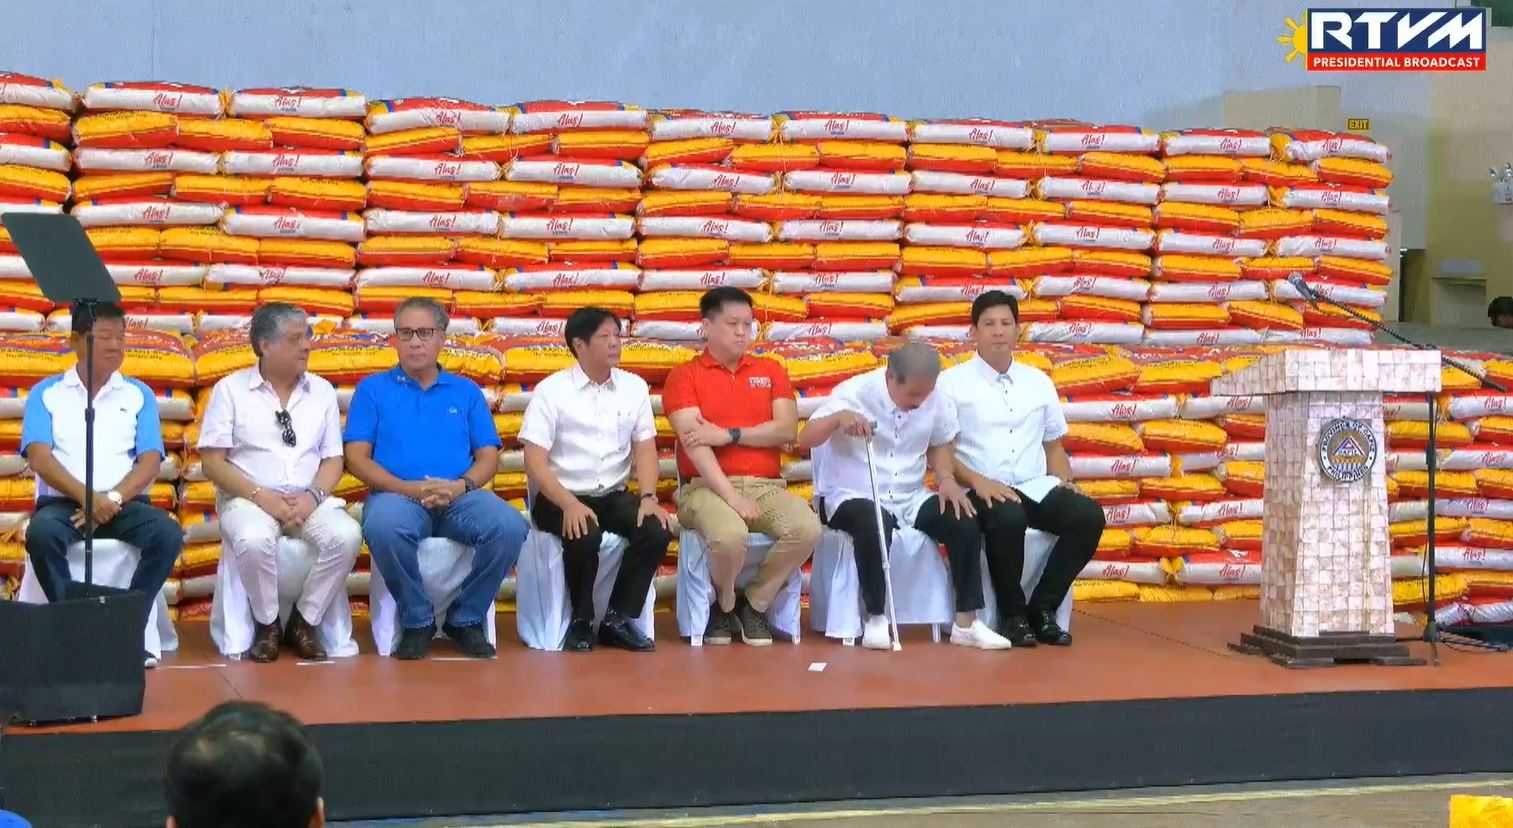 Ex-Senator Mar Roxas joins PBBM in rice distribution in Capiz